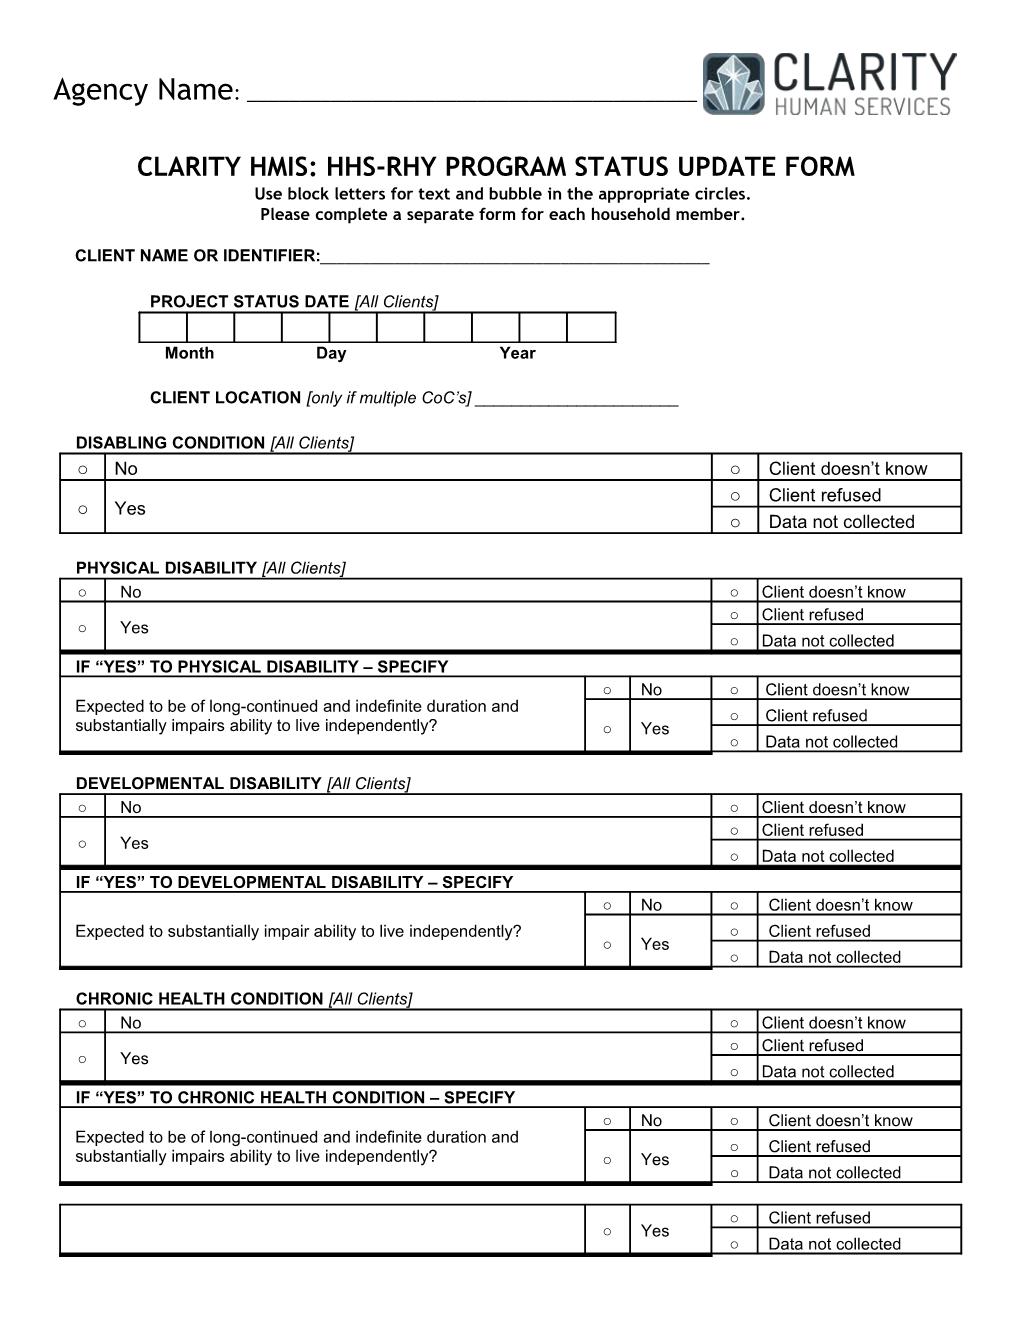 Clarity Hmis: Hhs-Rhy Program Status Update Form